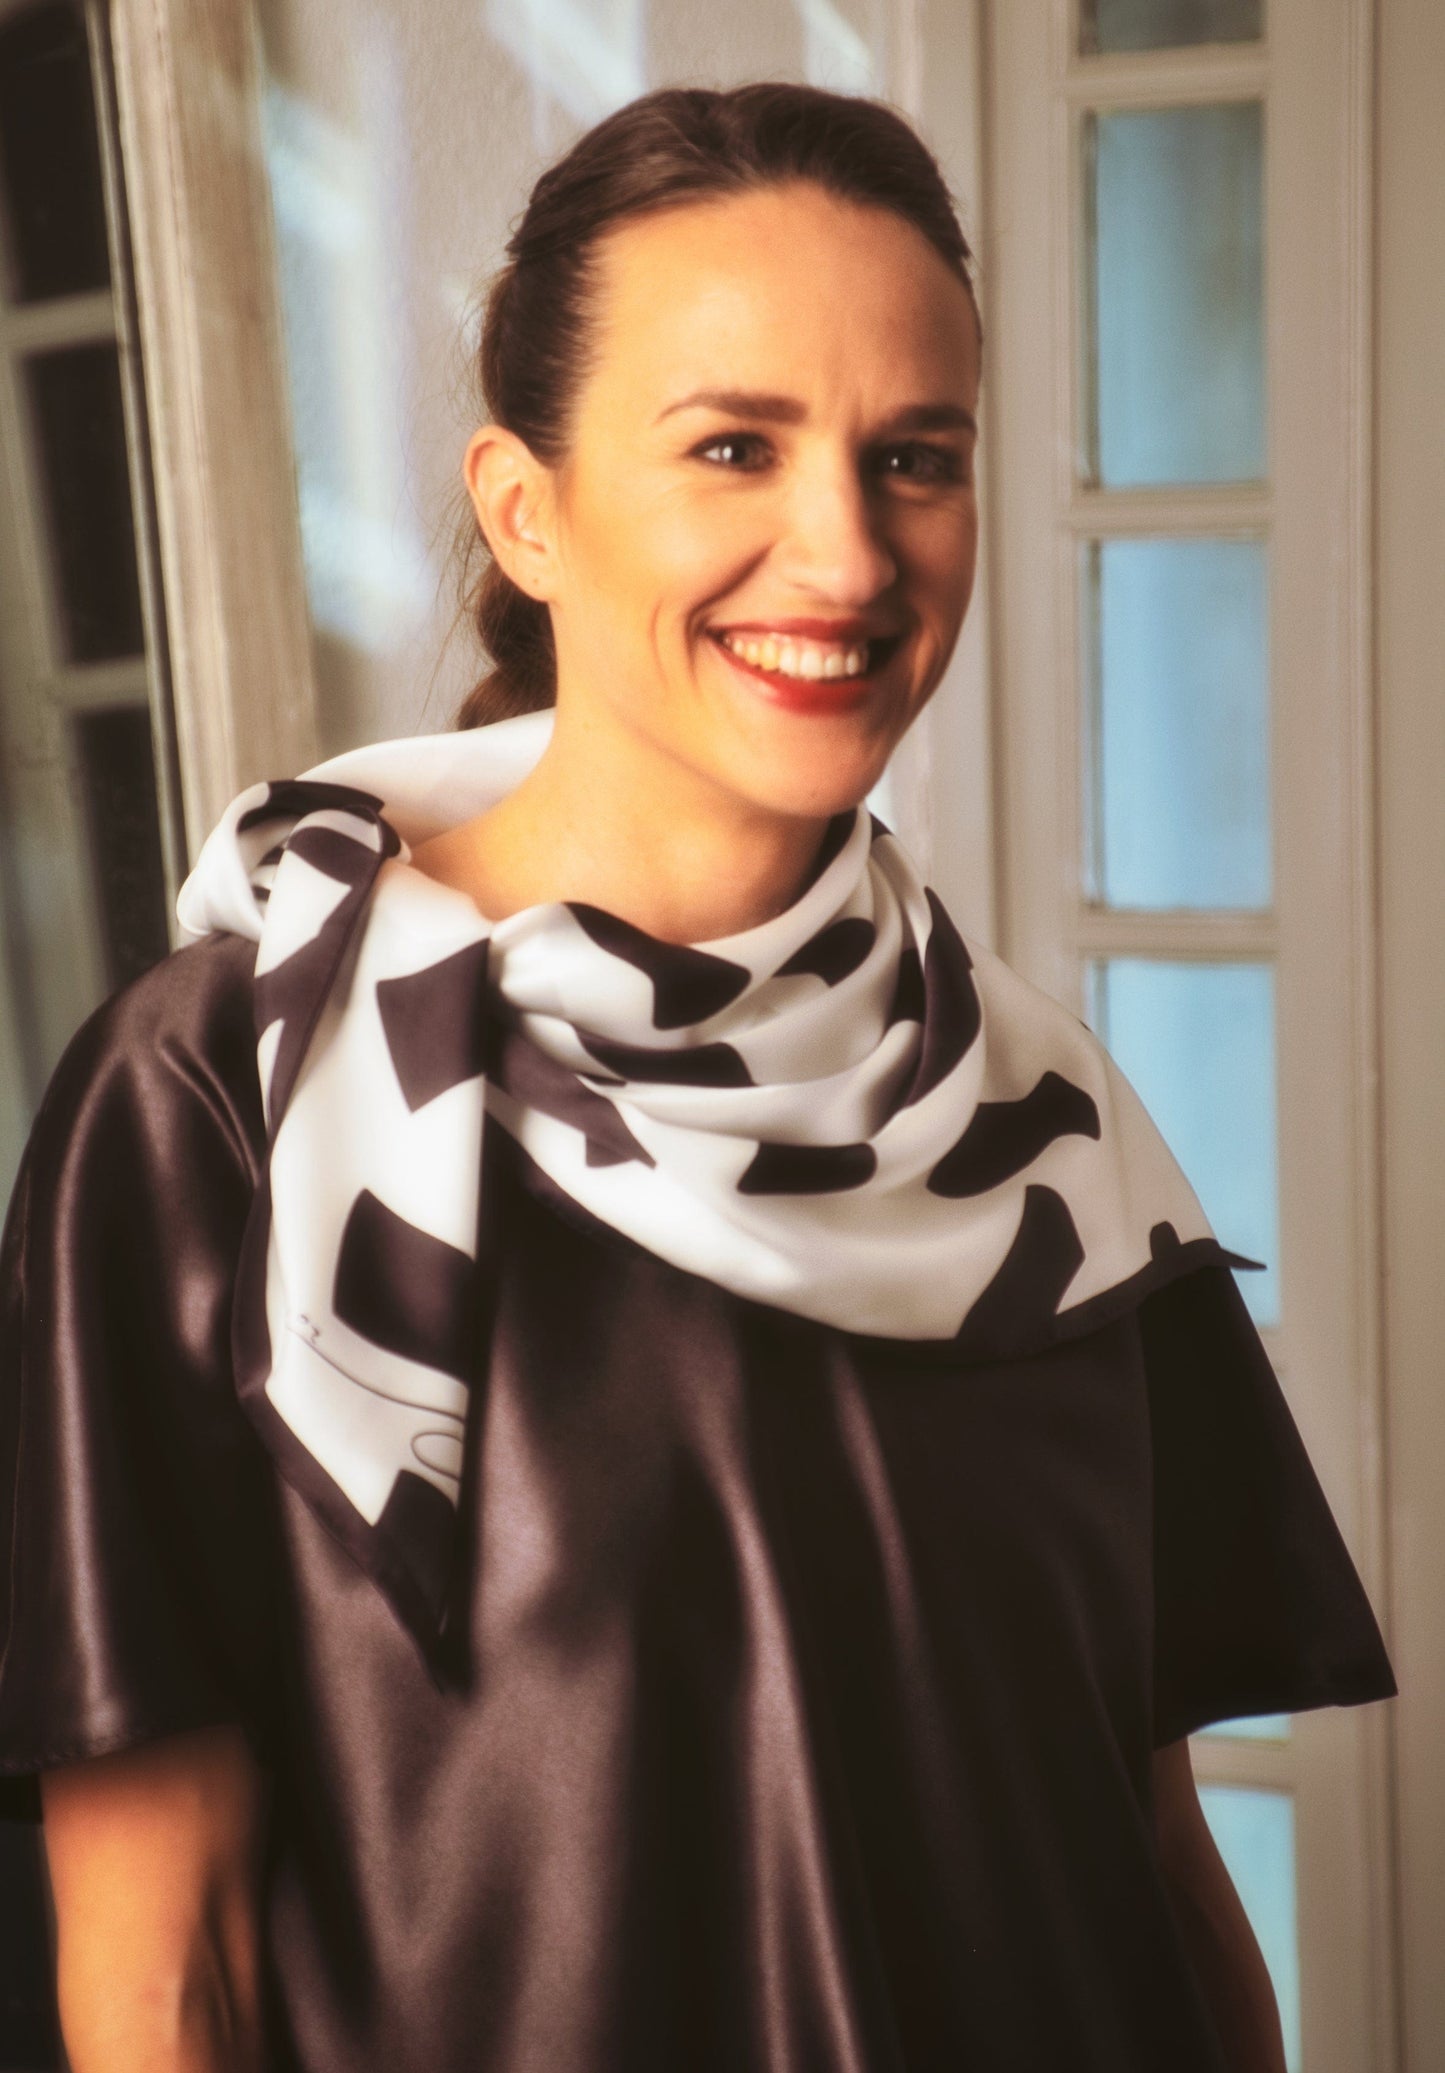 BEVERLY SMART foulard FOULARD en soie - édition limitée, signé Beverly Smart